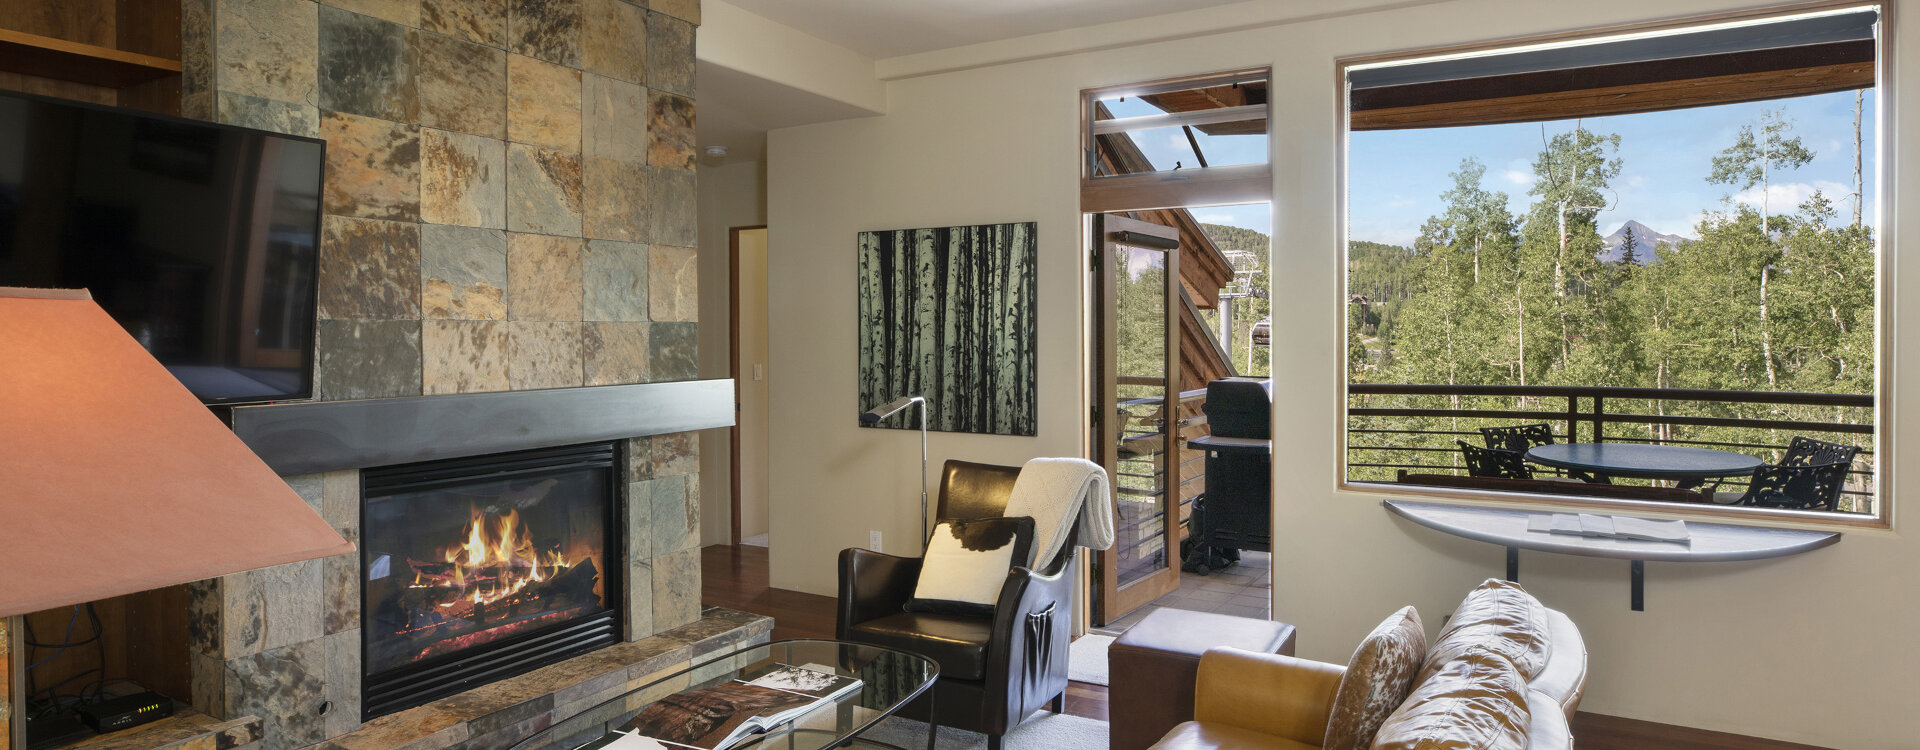 1-telluride-wilson-view-living-room-fireplace